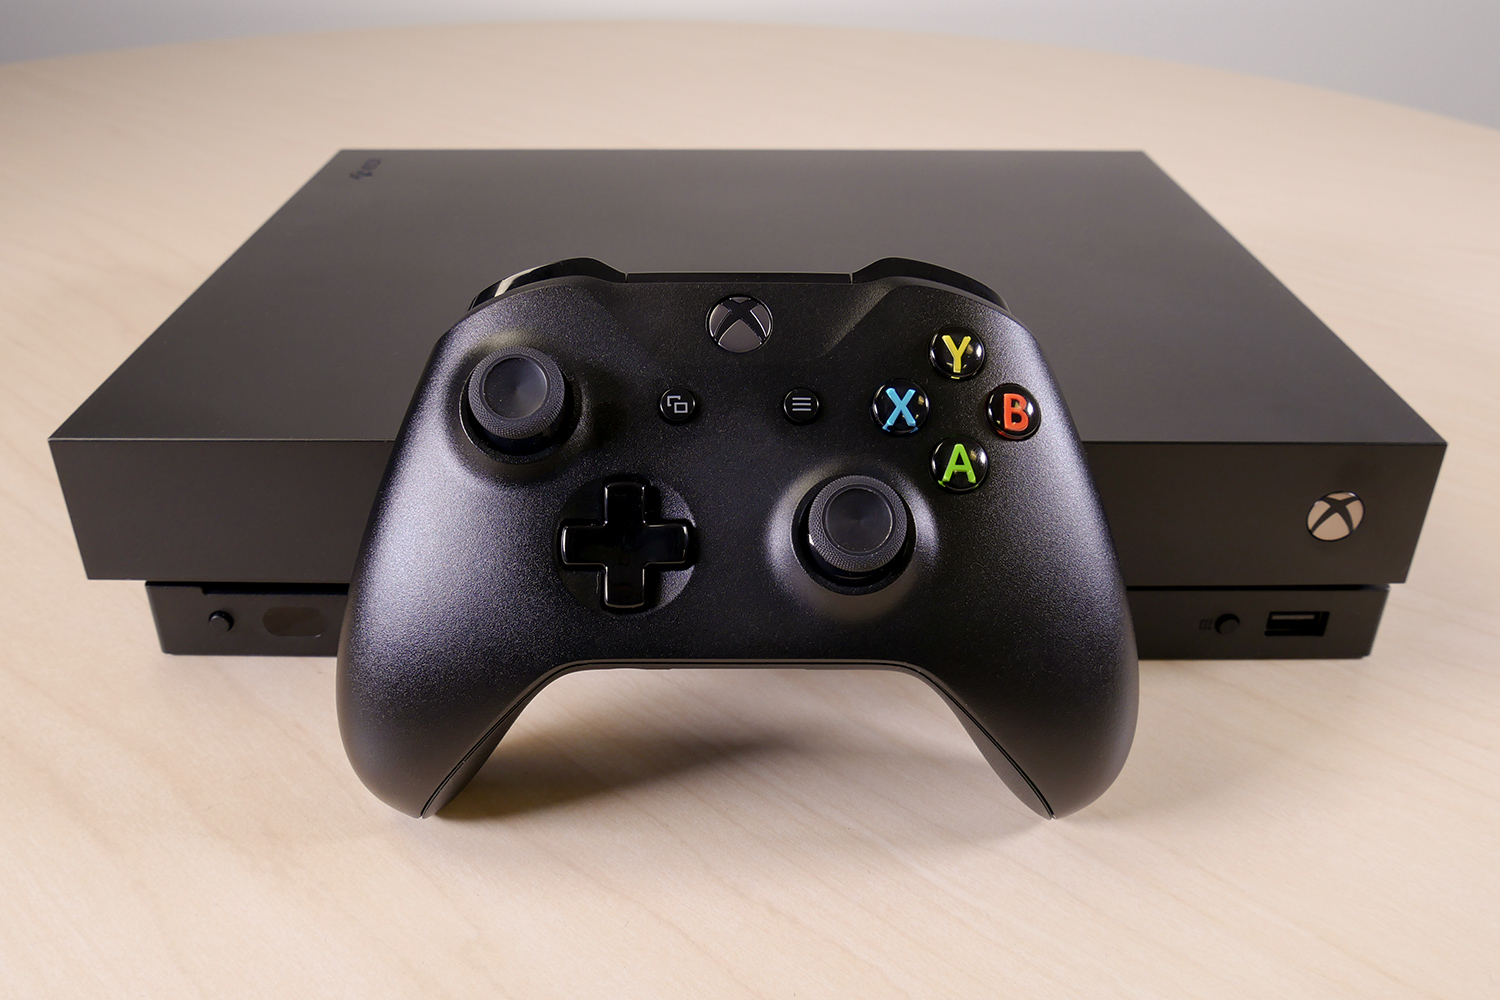 graven Samenpersen provincie Xbox One X Review 2020: The Most Powerful Console | Digital Trends